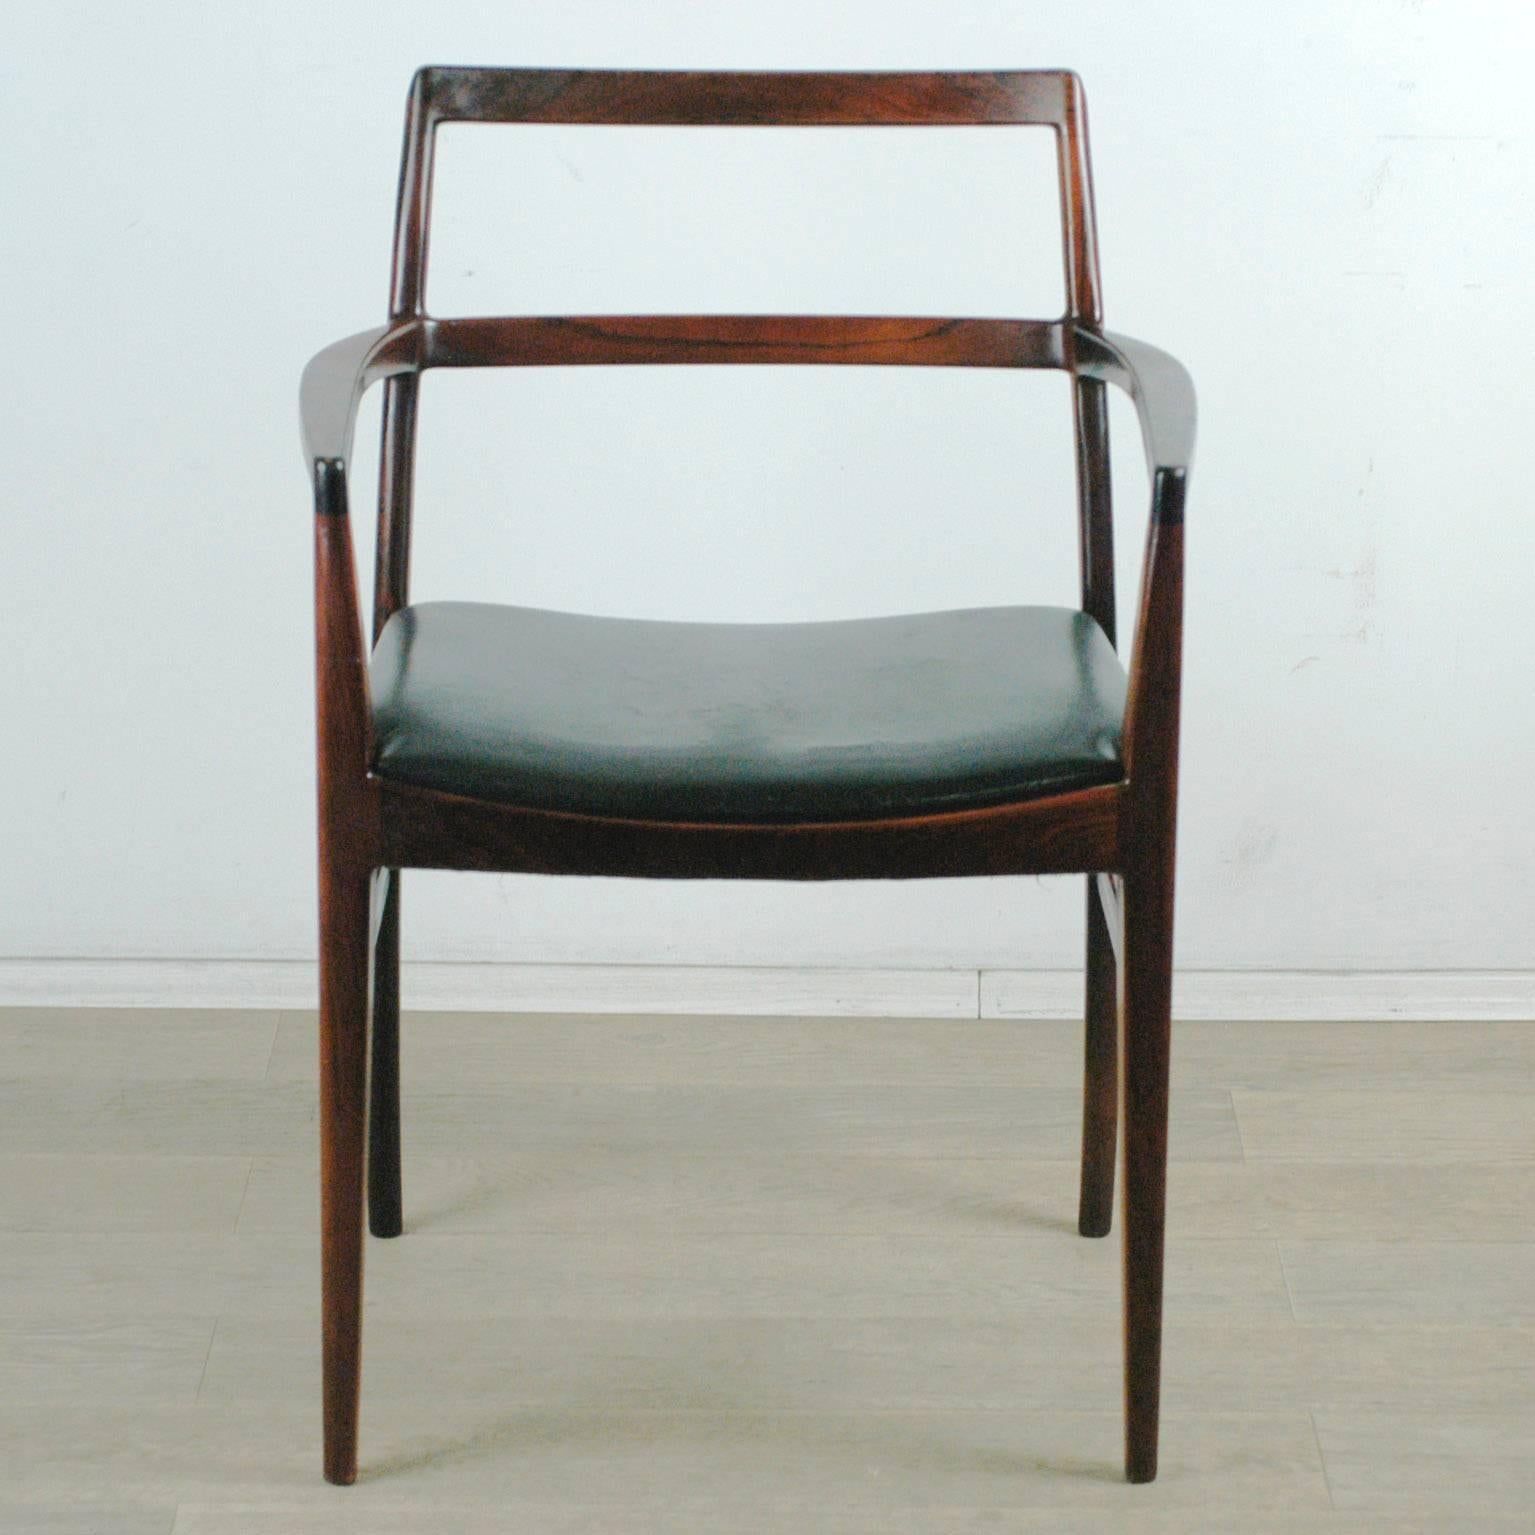 Danish Modern rosewood armchair with original black leather seat.